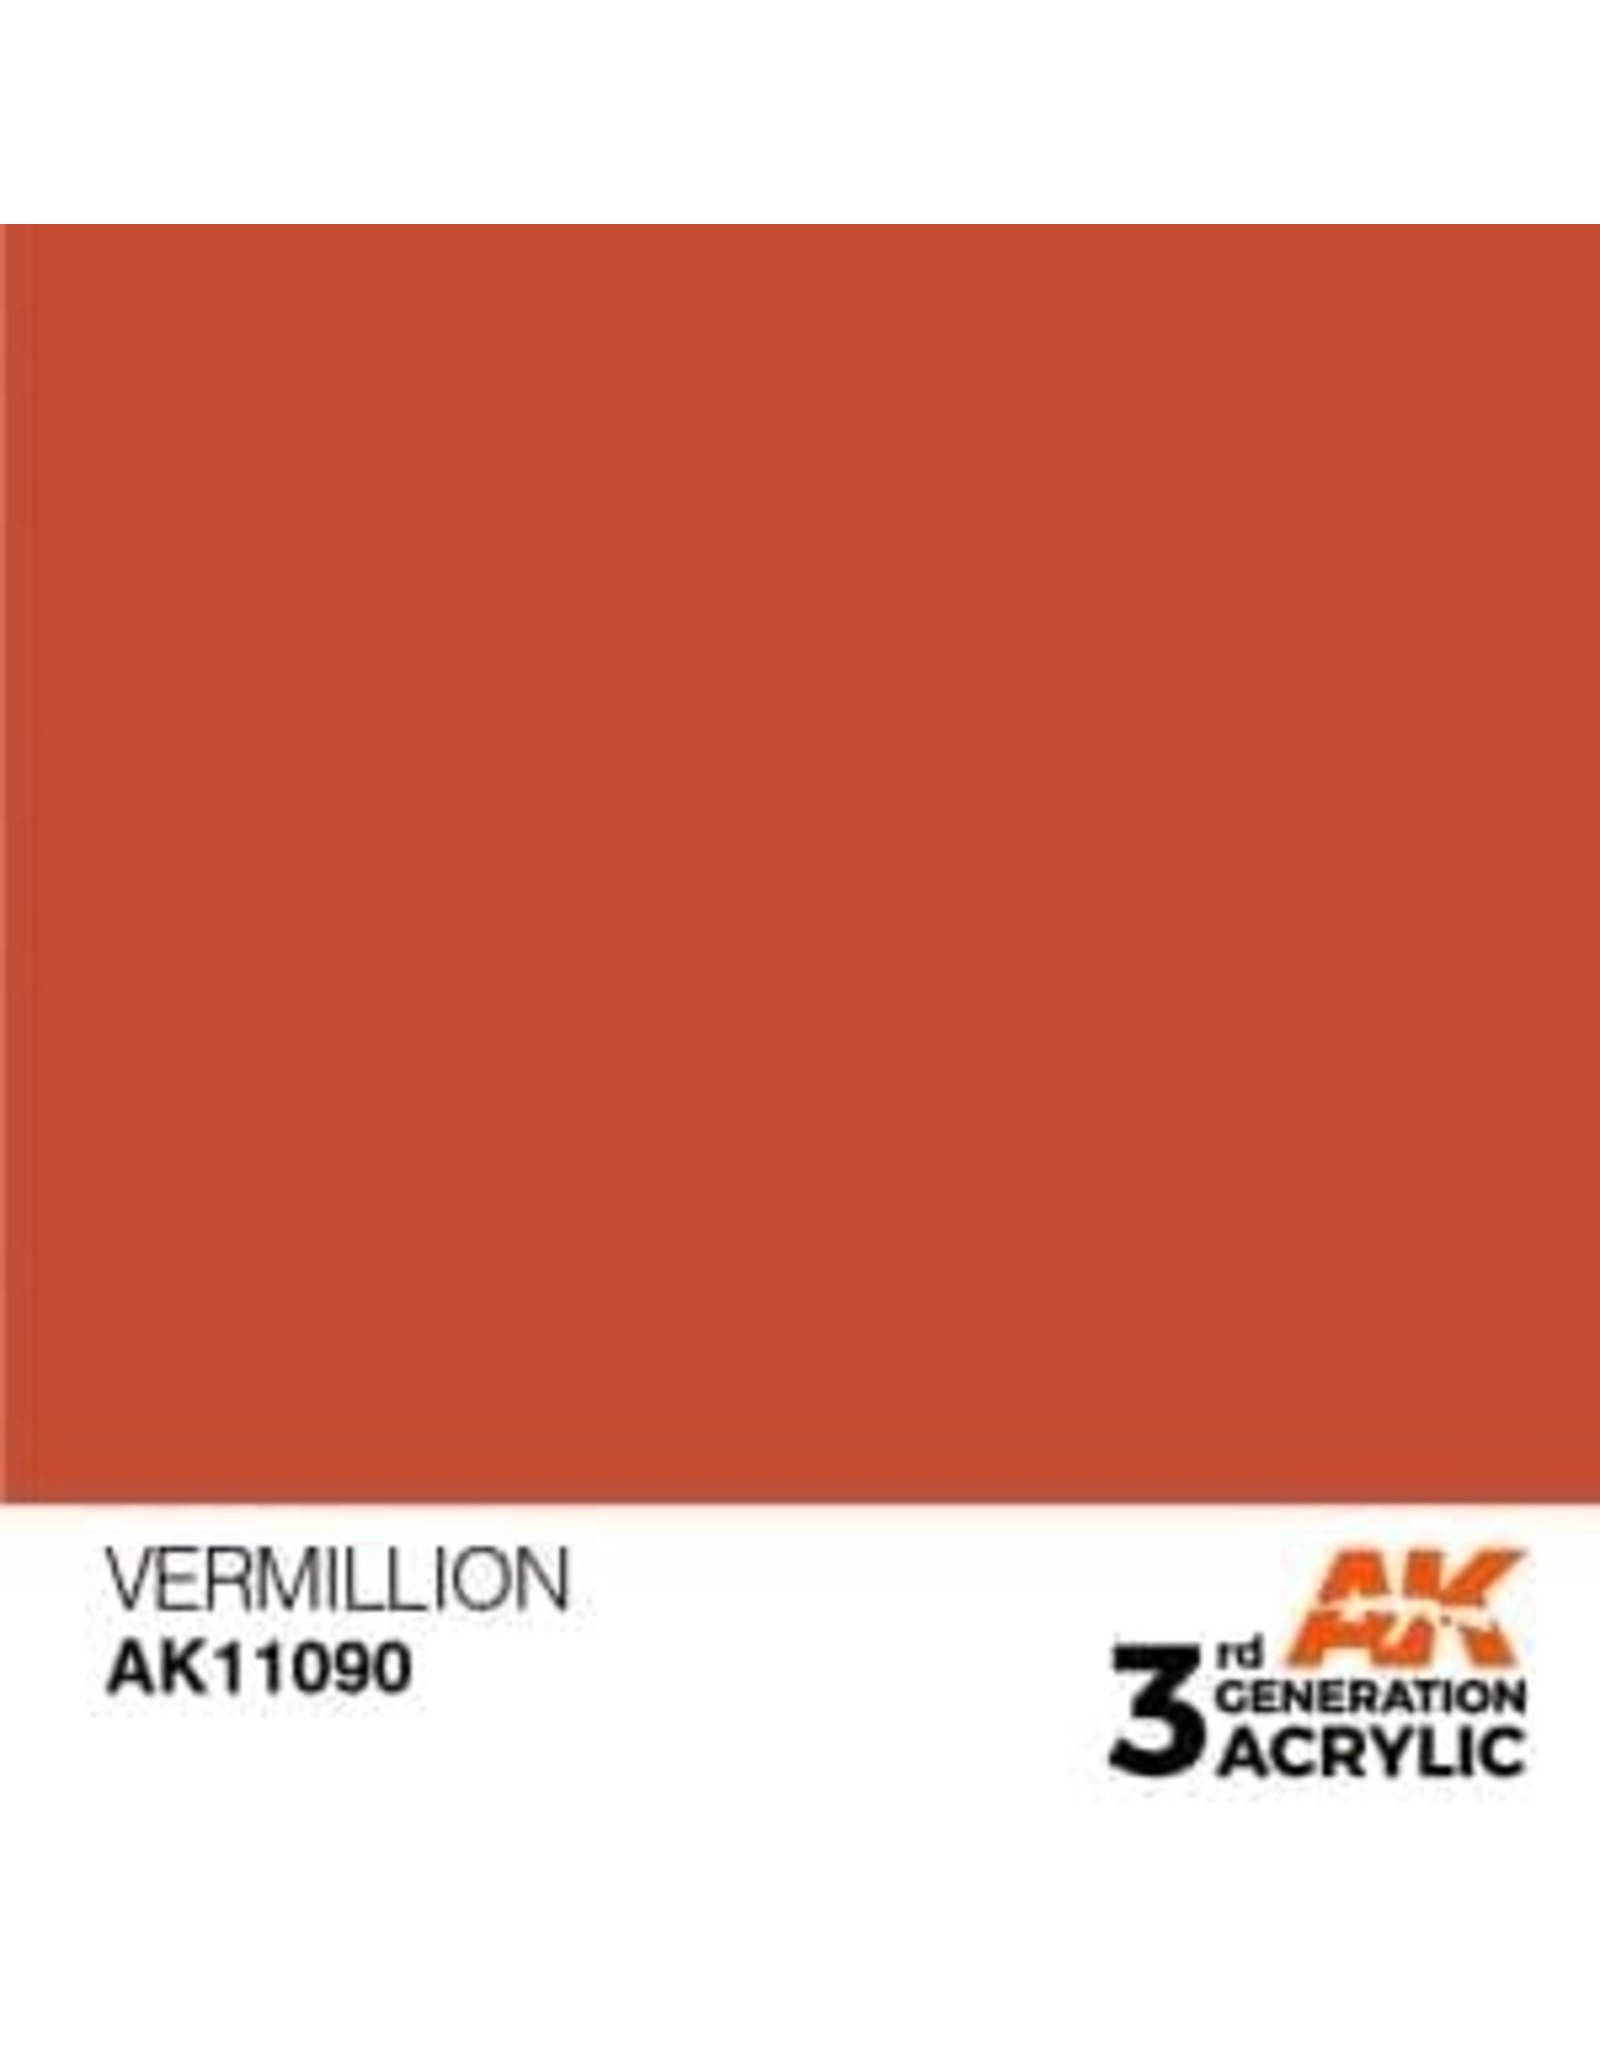 AK Interactive 3RD GEN ACRYLIC VERMILLION 17ML